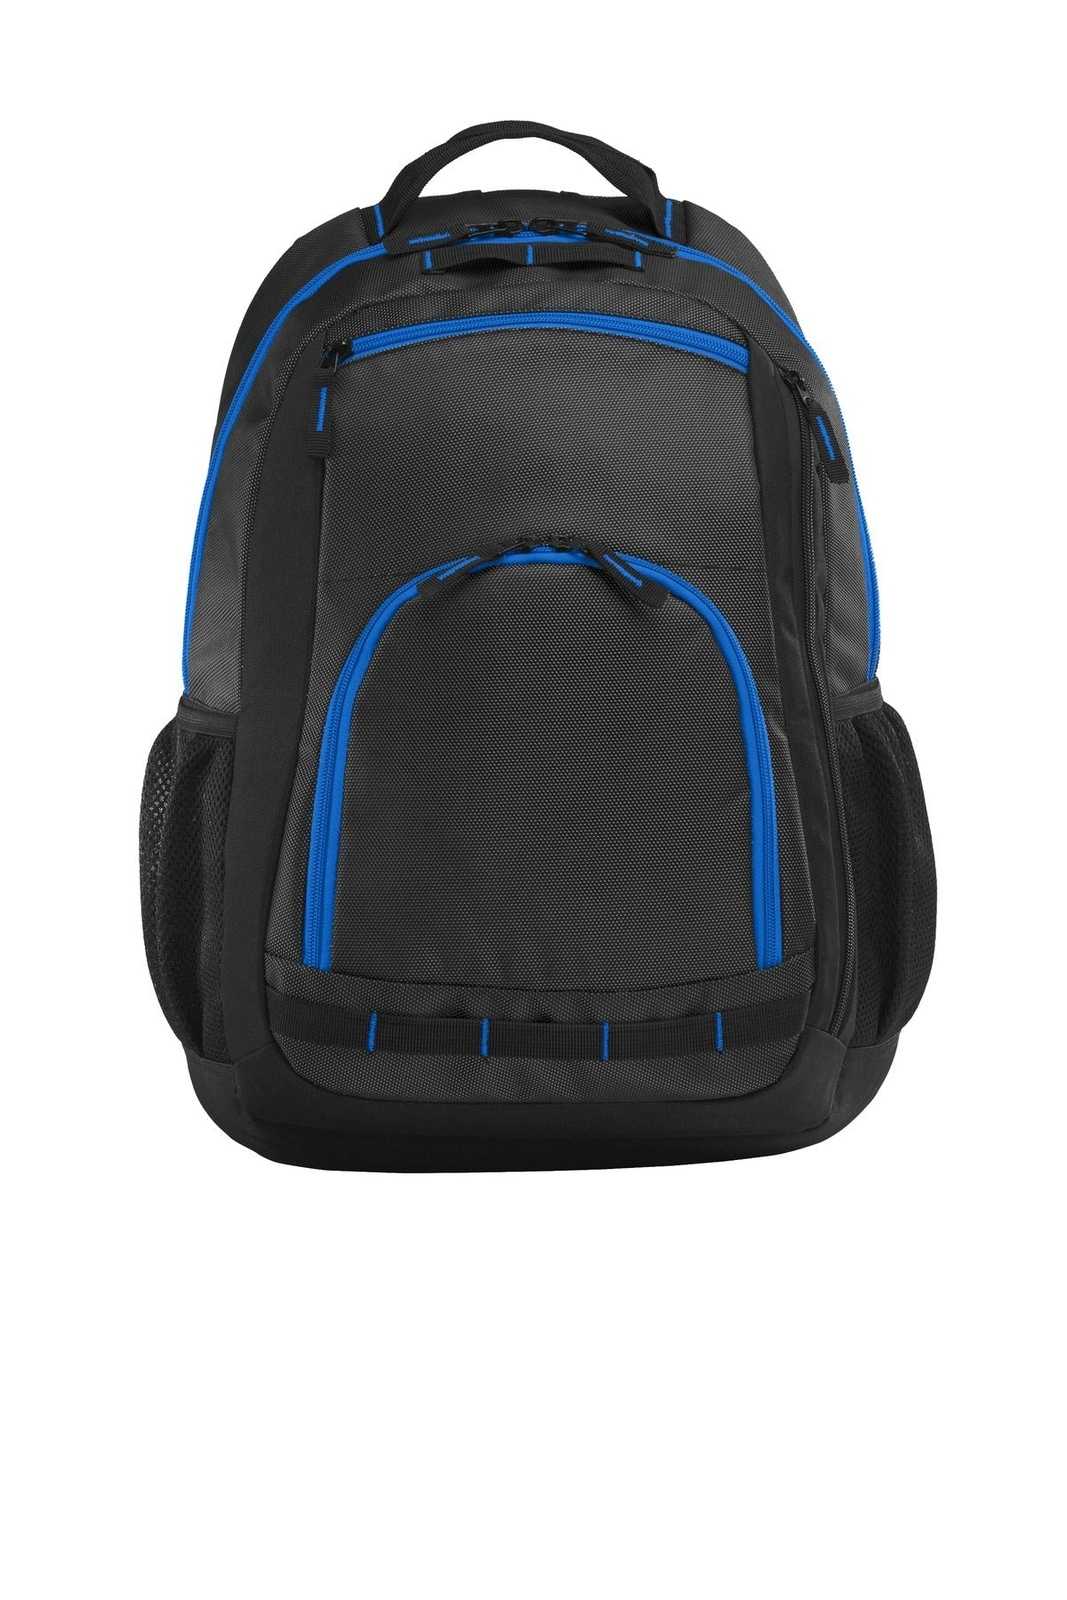 Port Authority BG207 Xtreme Backpack - Dark Gray Black Shock Blue - HIT a Double - 1